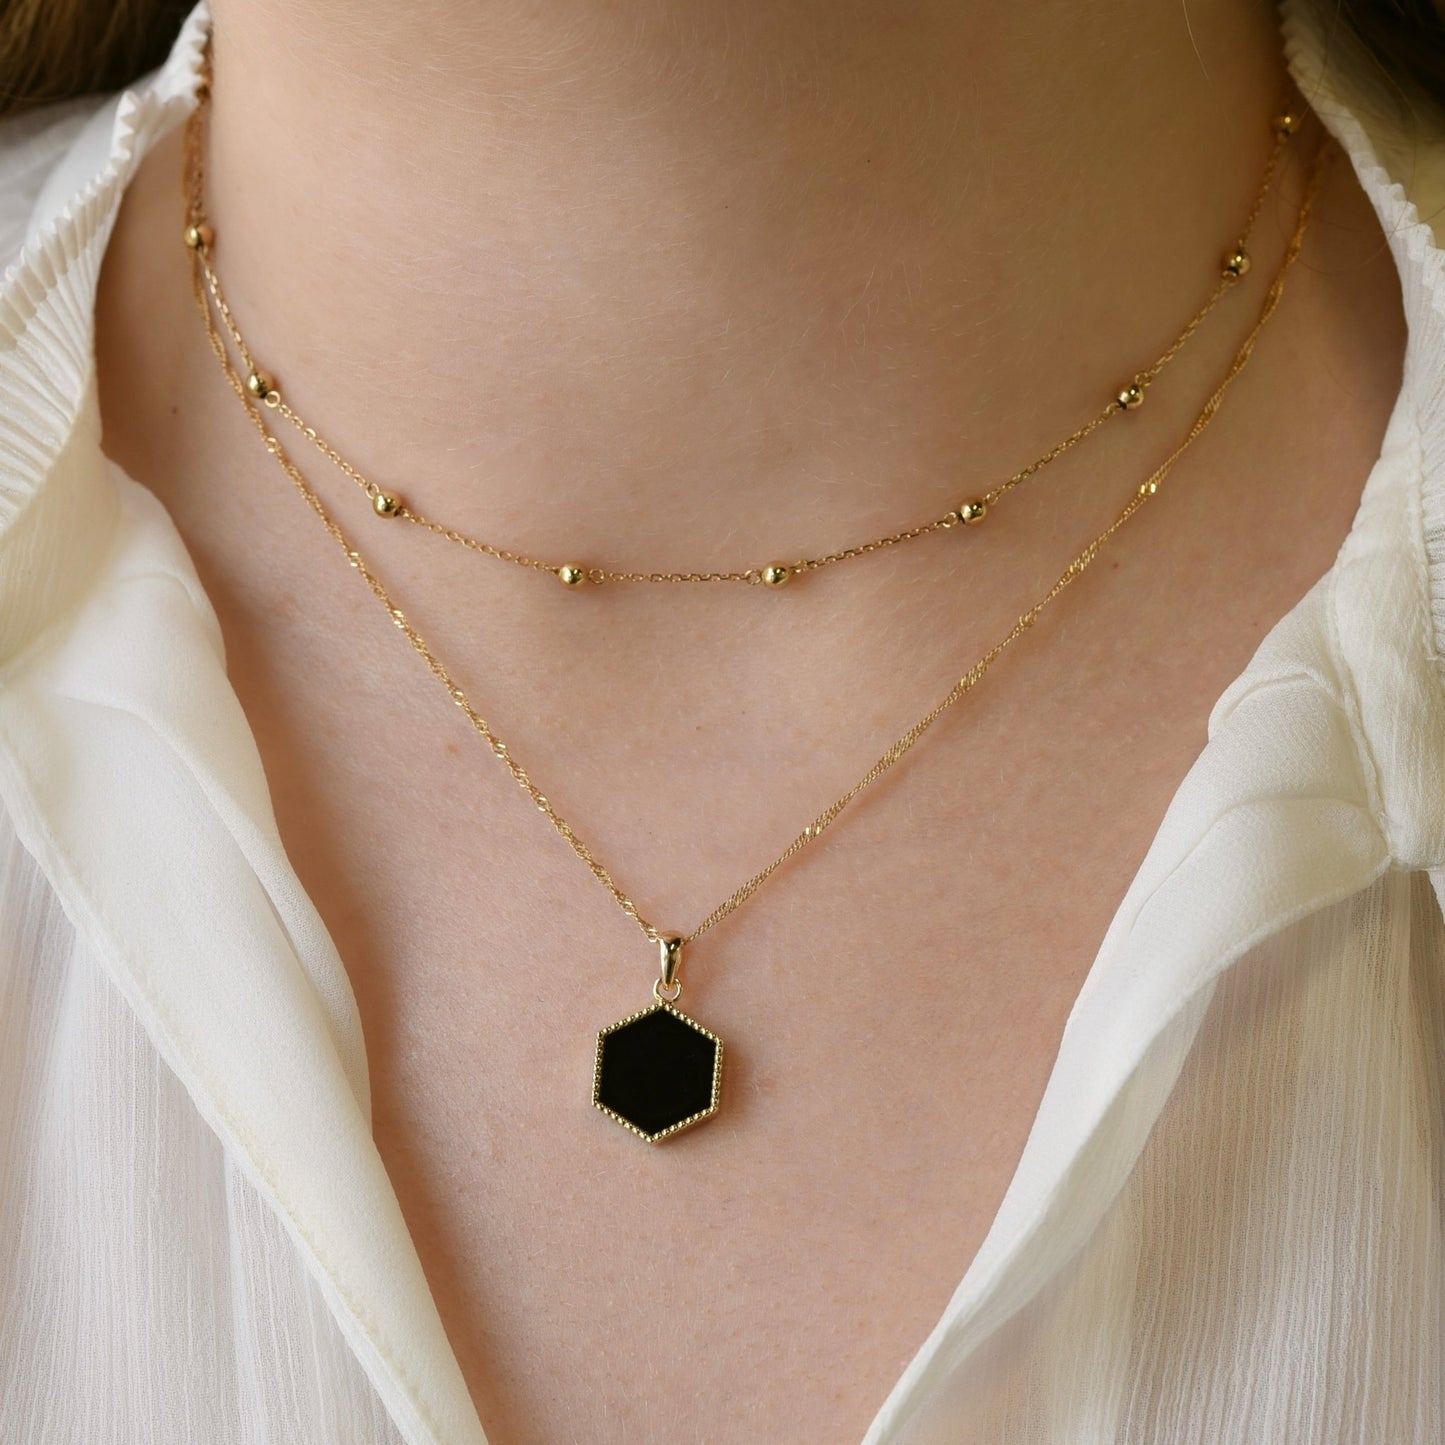 Hexa Twist Necklace in Black Onyx - 18k Gold - Lynor